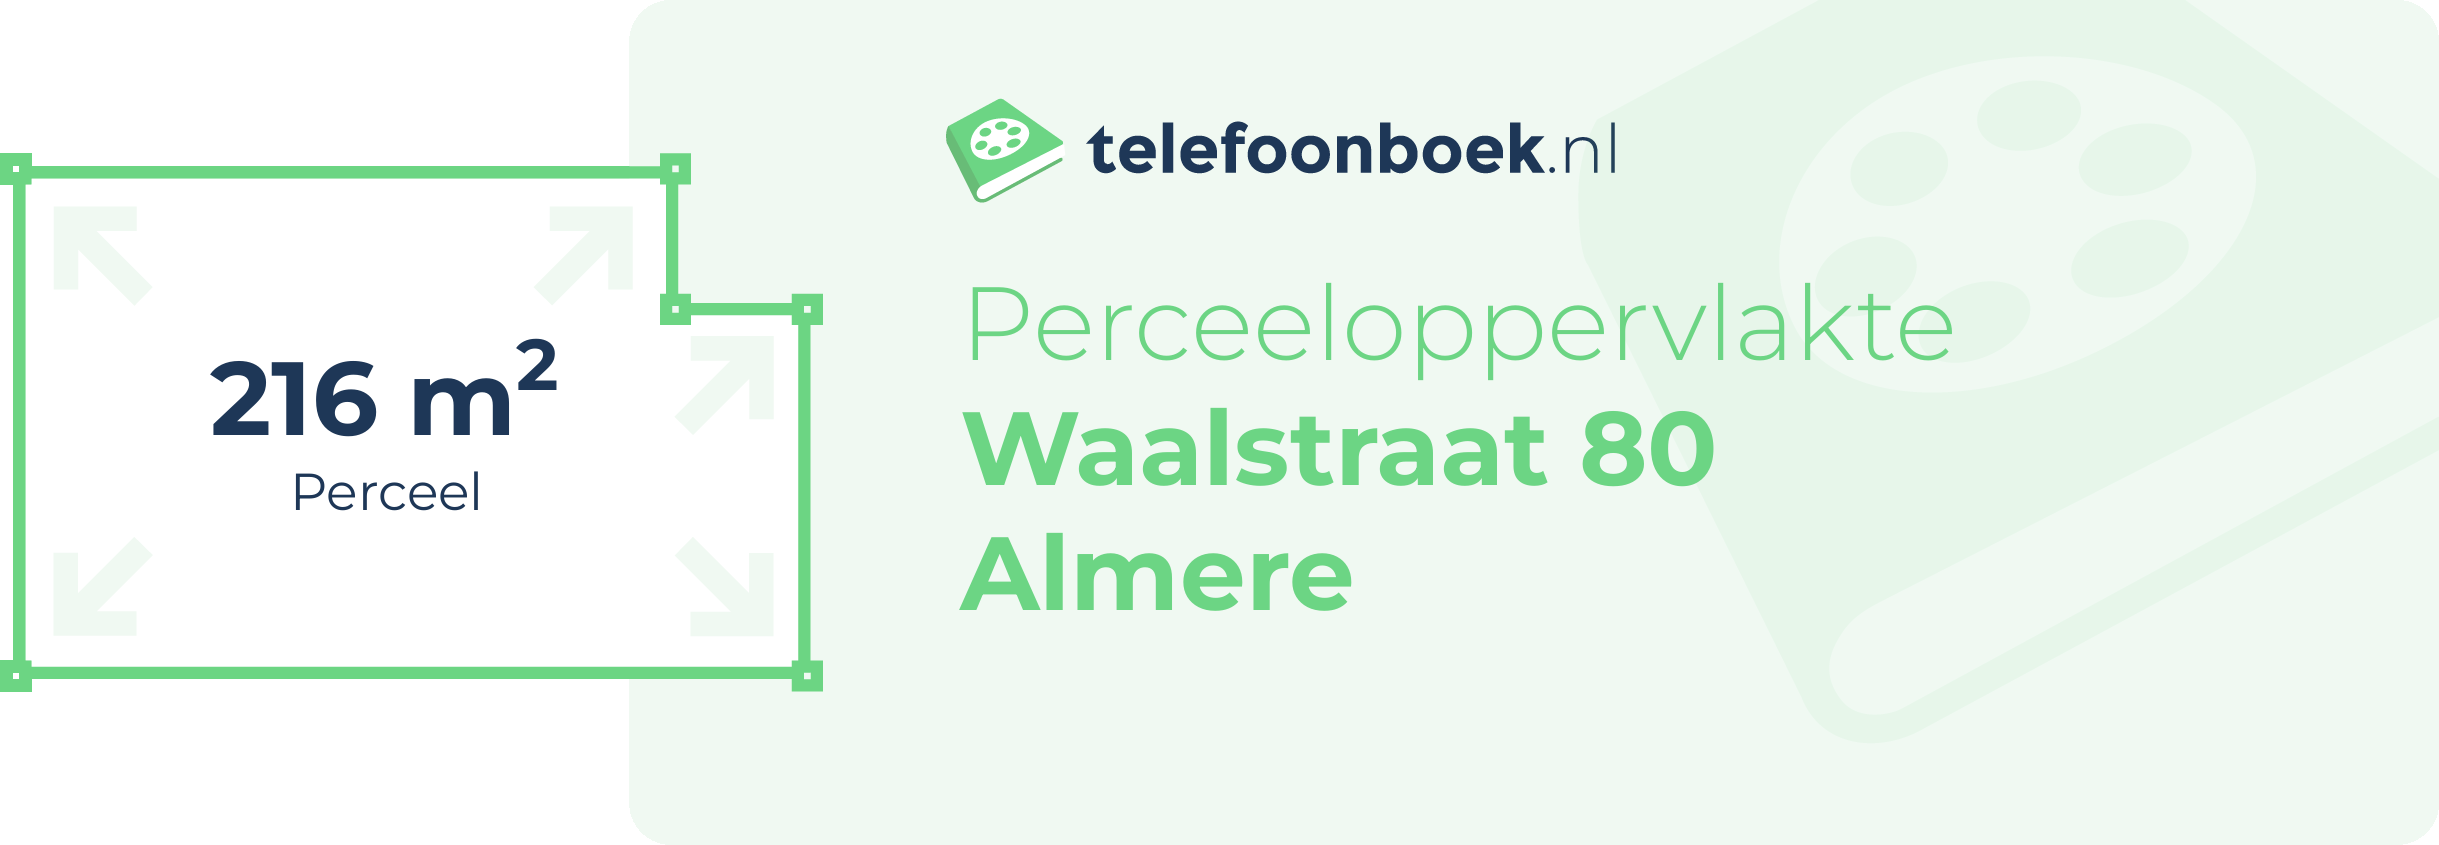 Perceeloppervlakte Waalstraat 80 Almere